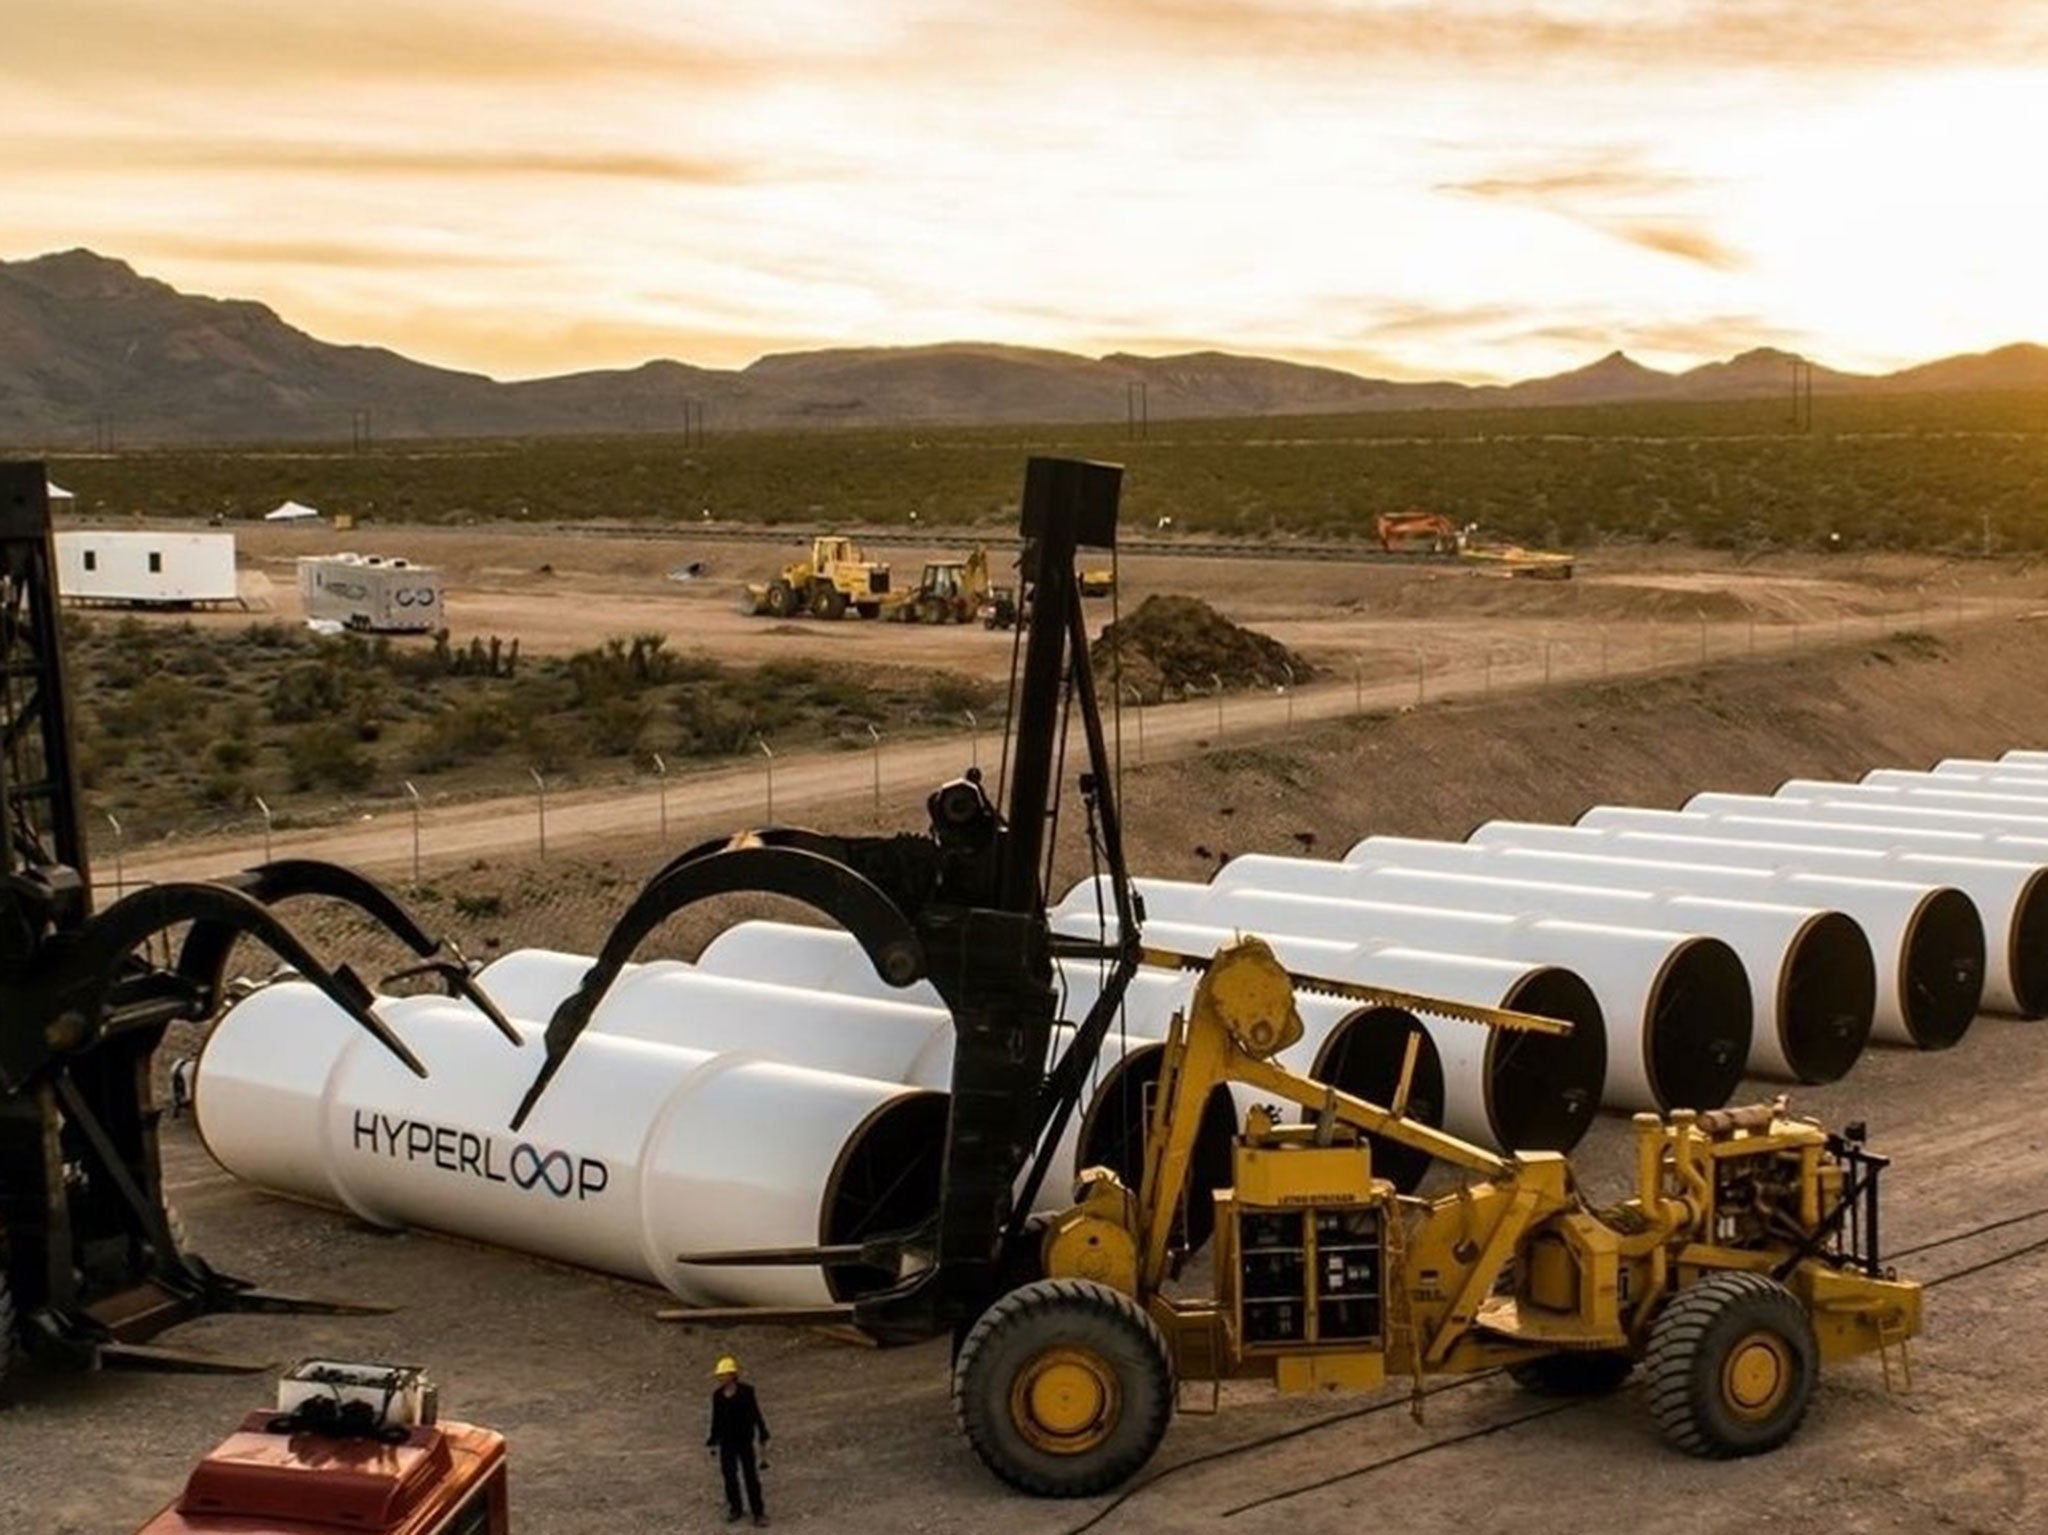 Hyperloop One tubes sit in the desert, awaiting assembly